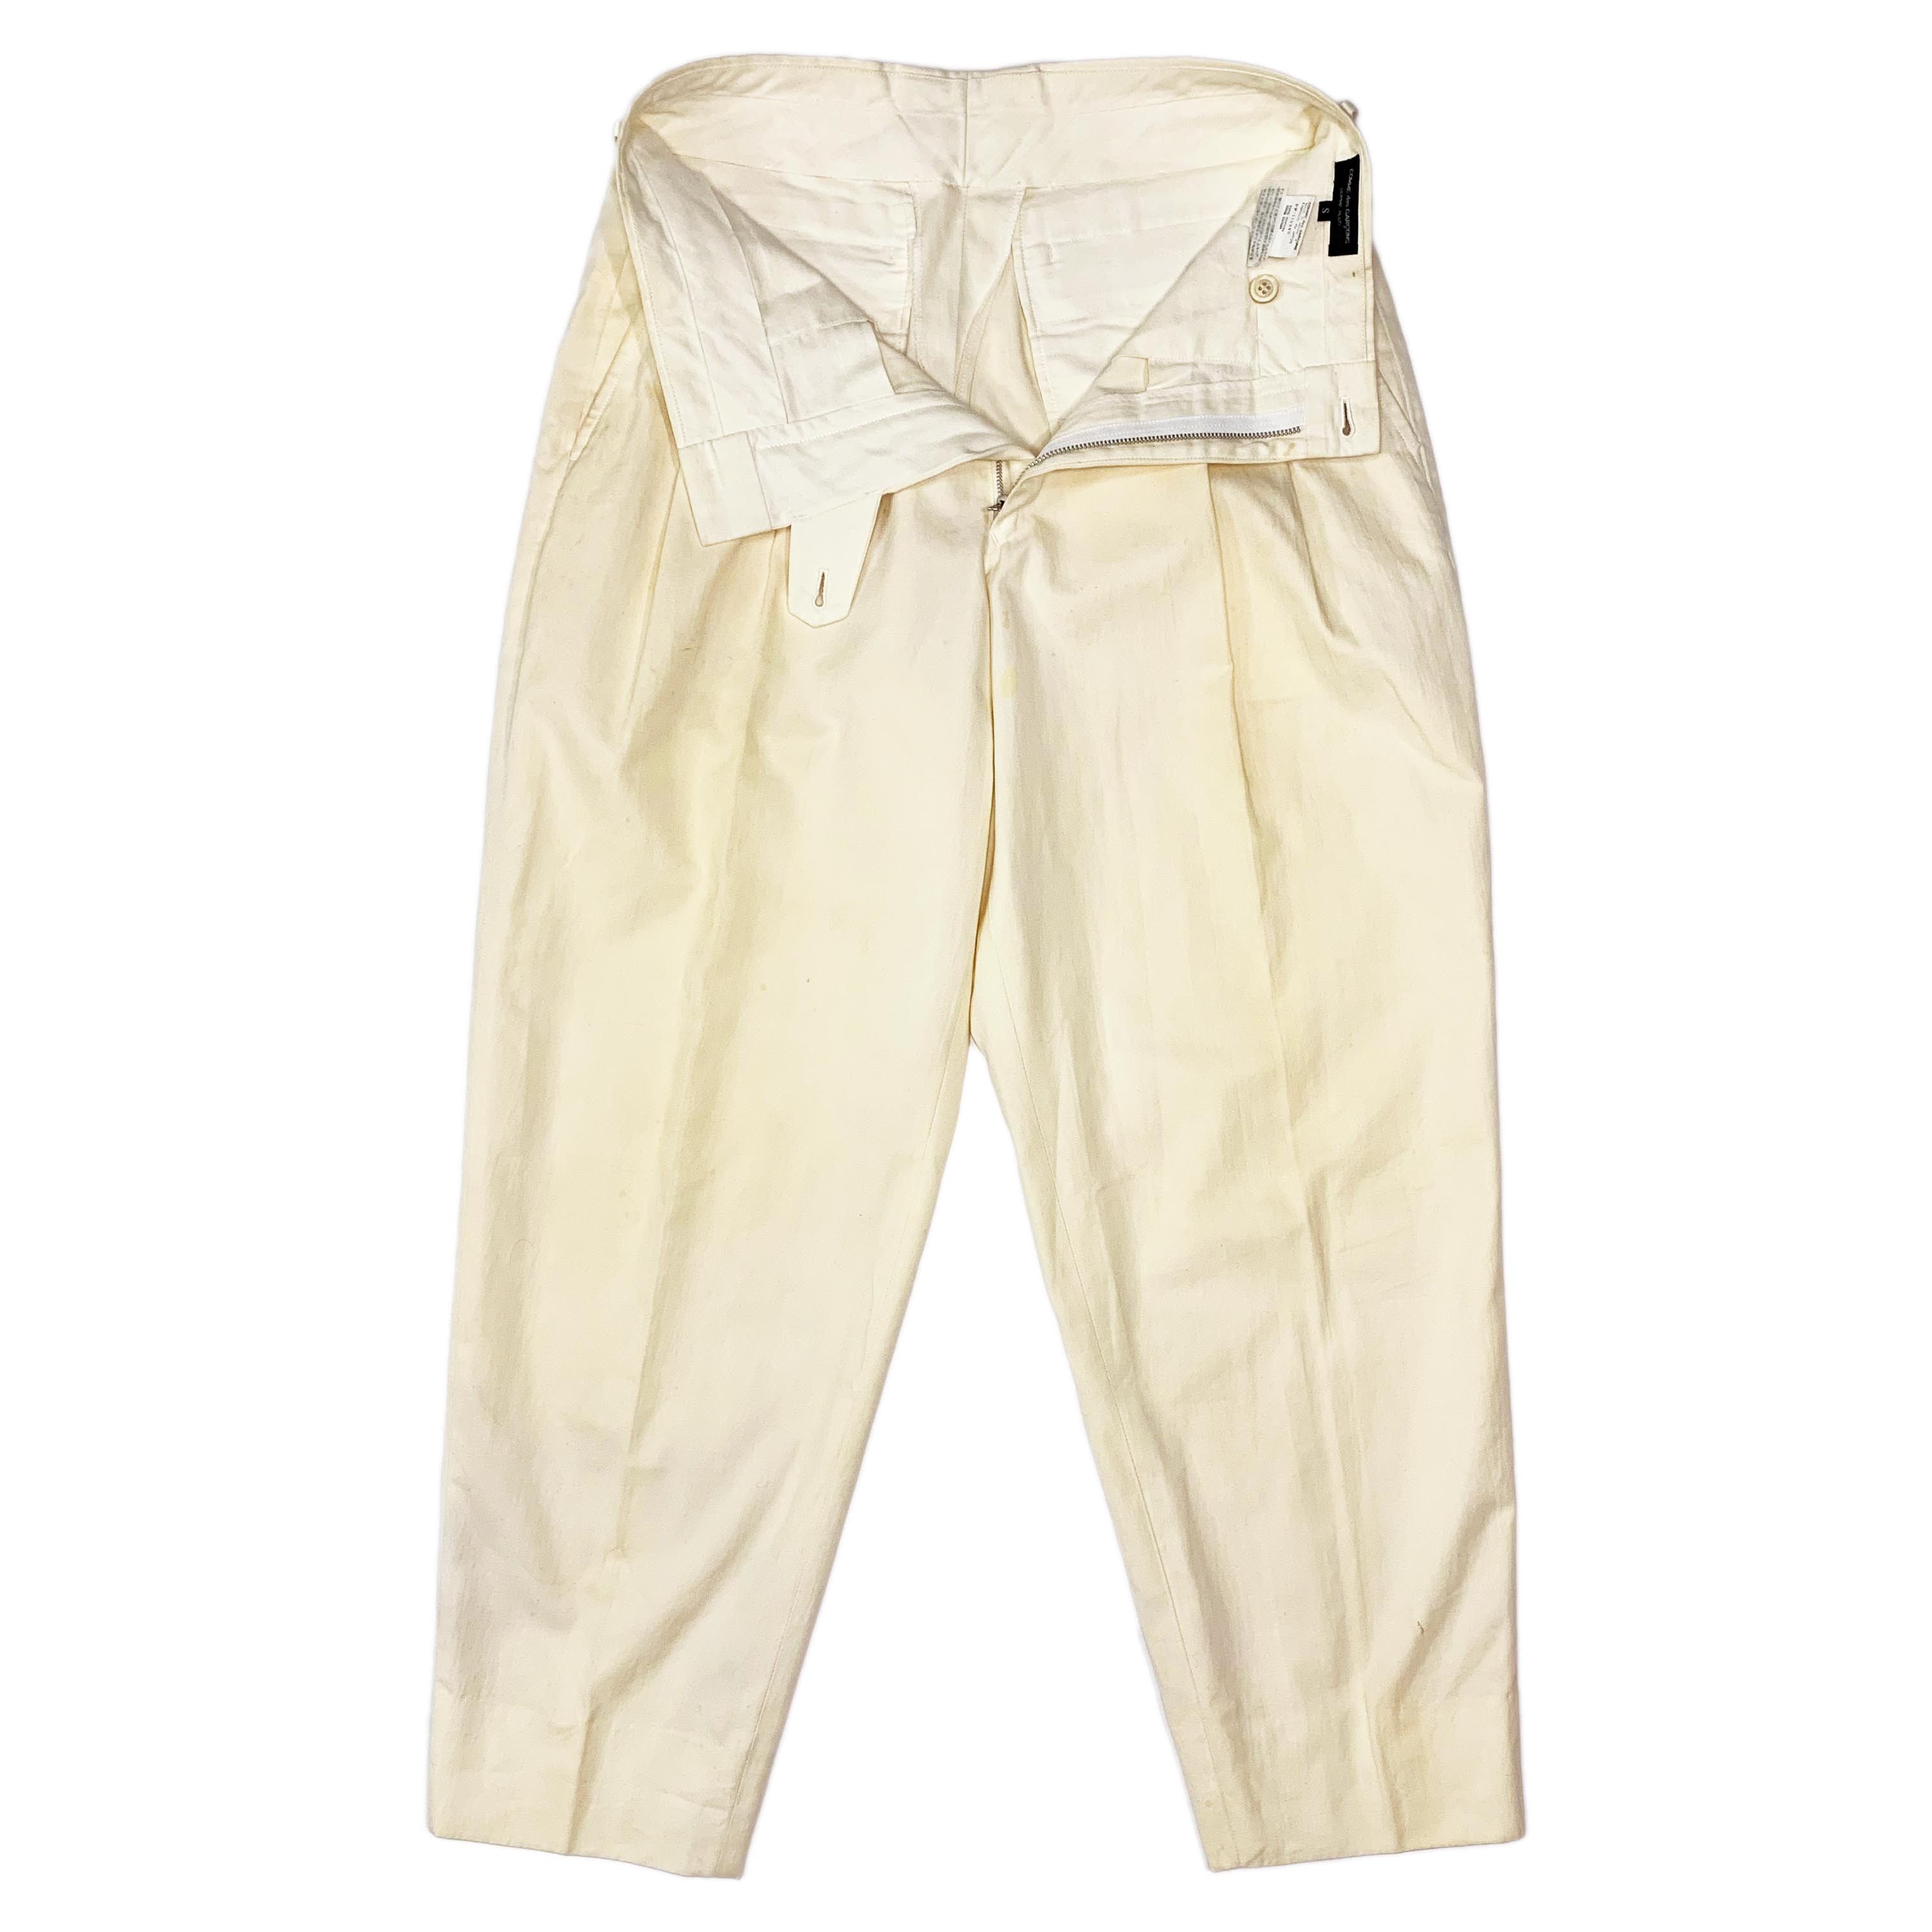 SS87 Cotton Pants - 2